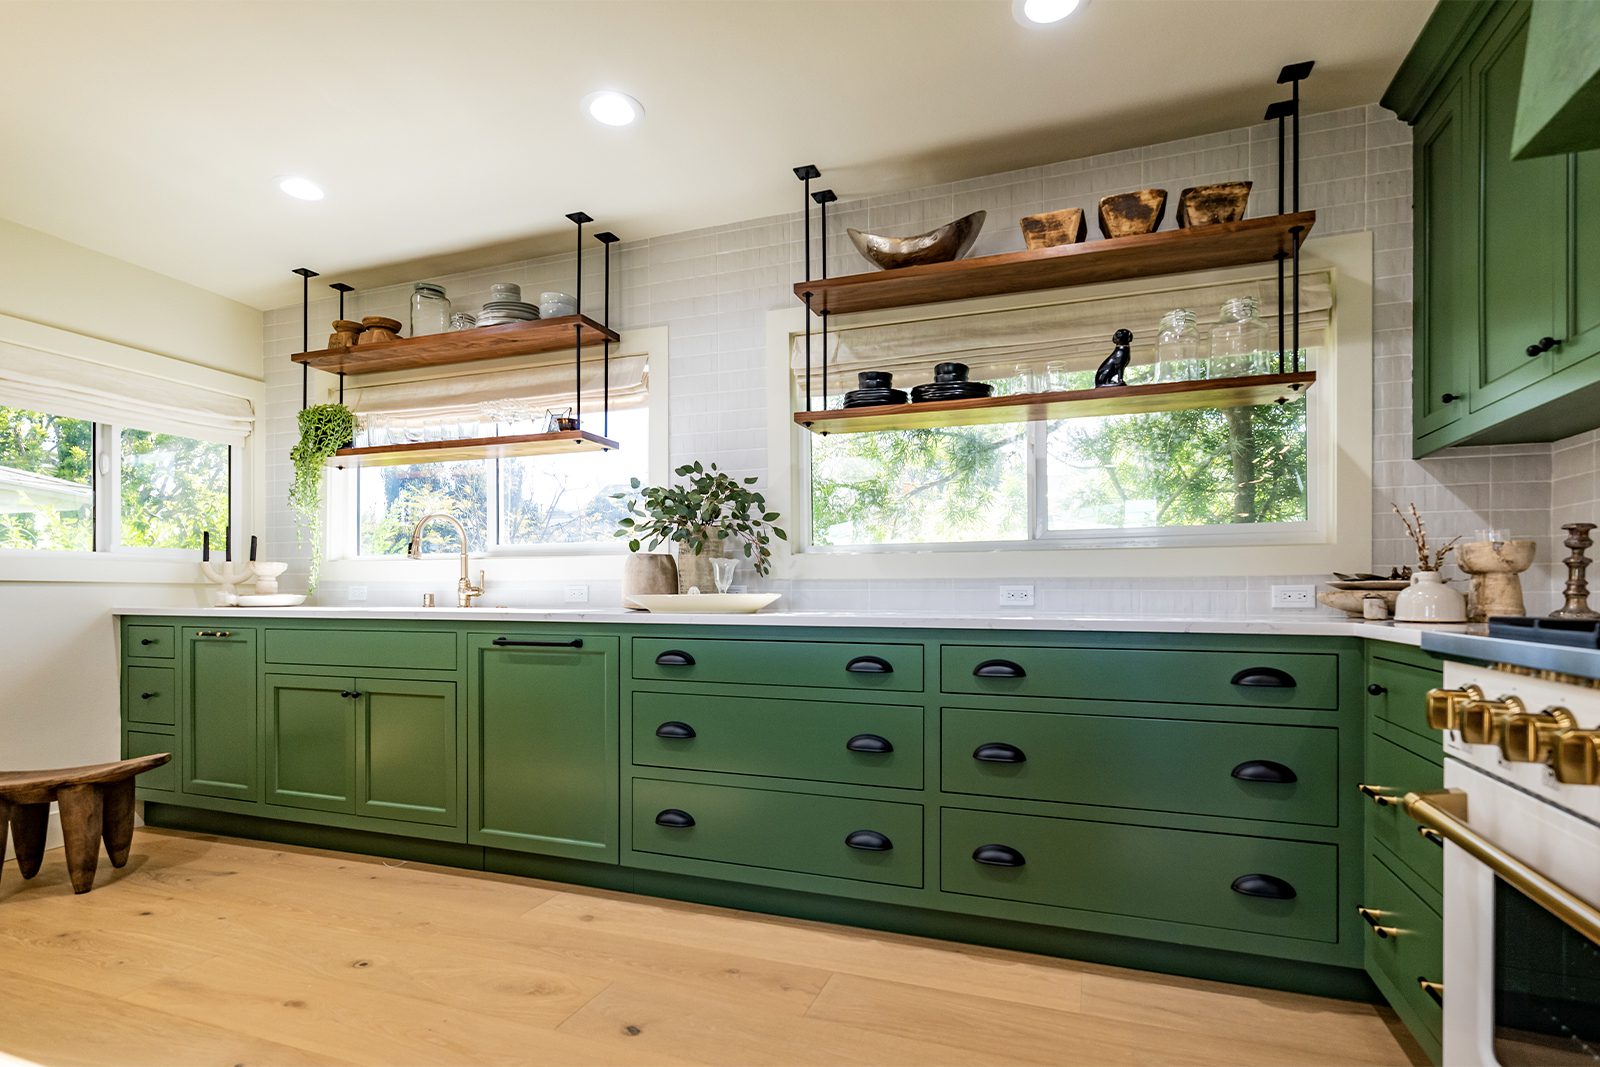 emma roberts ciou season 4 green kitchen reveal best colorful kitchens